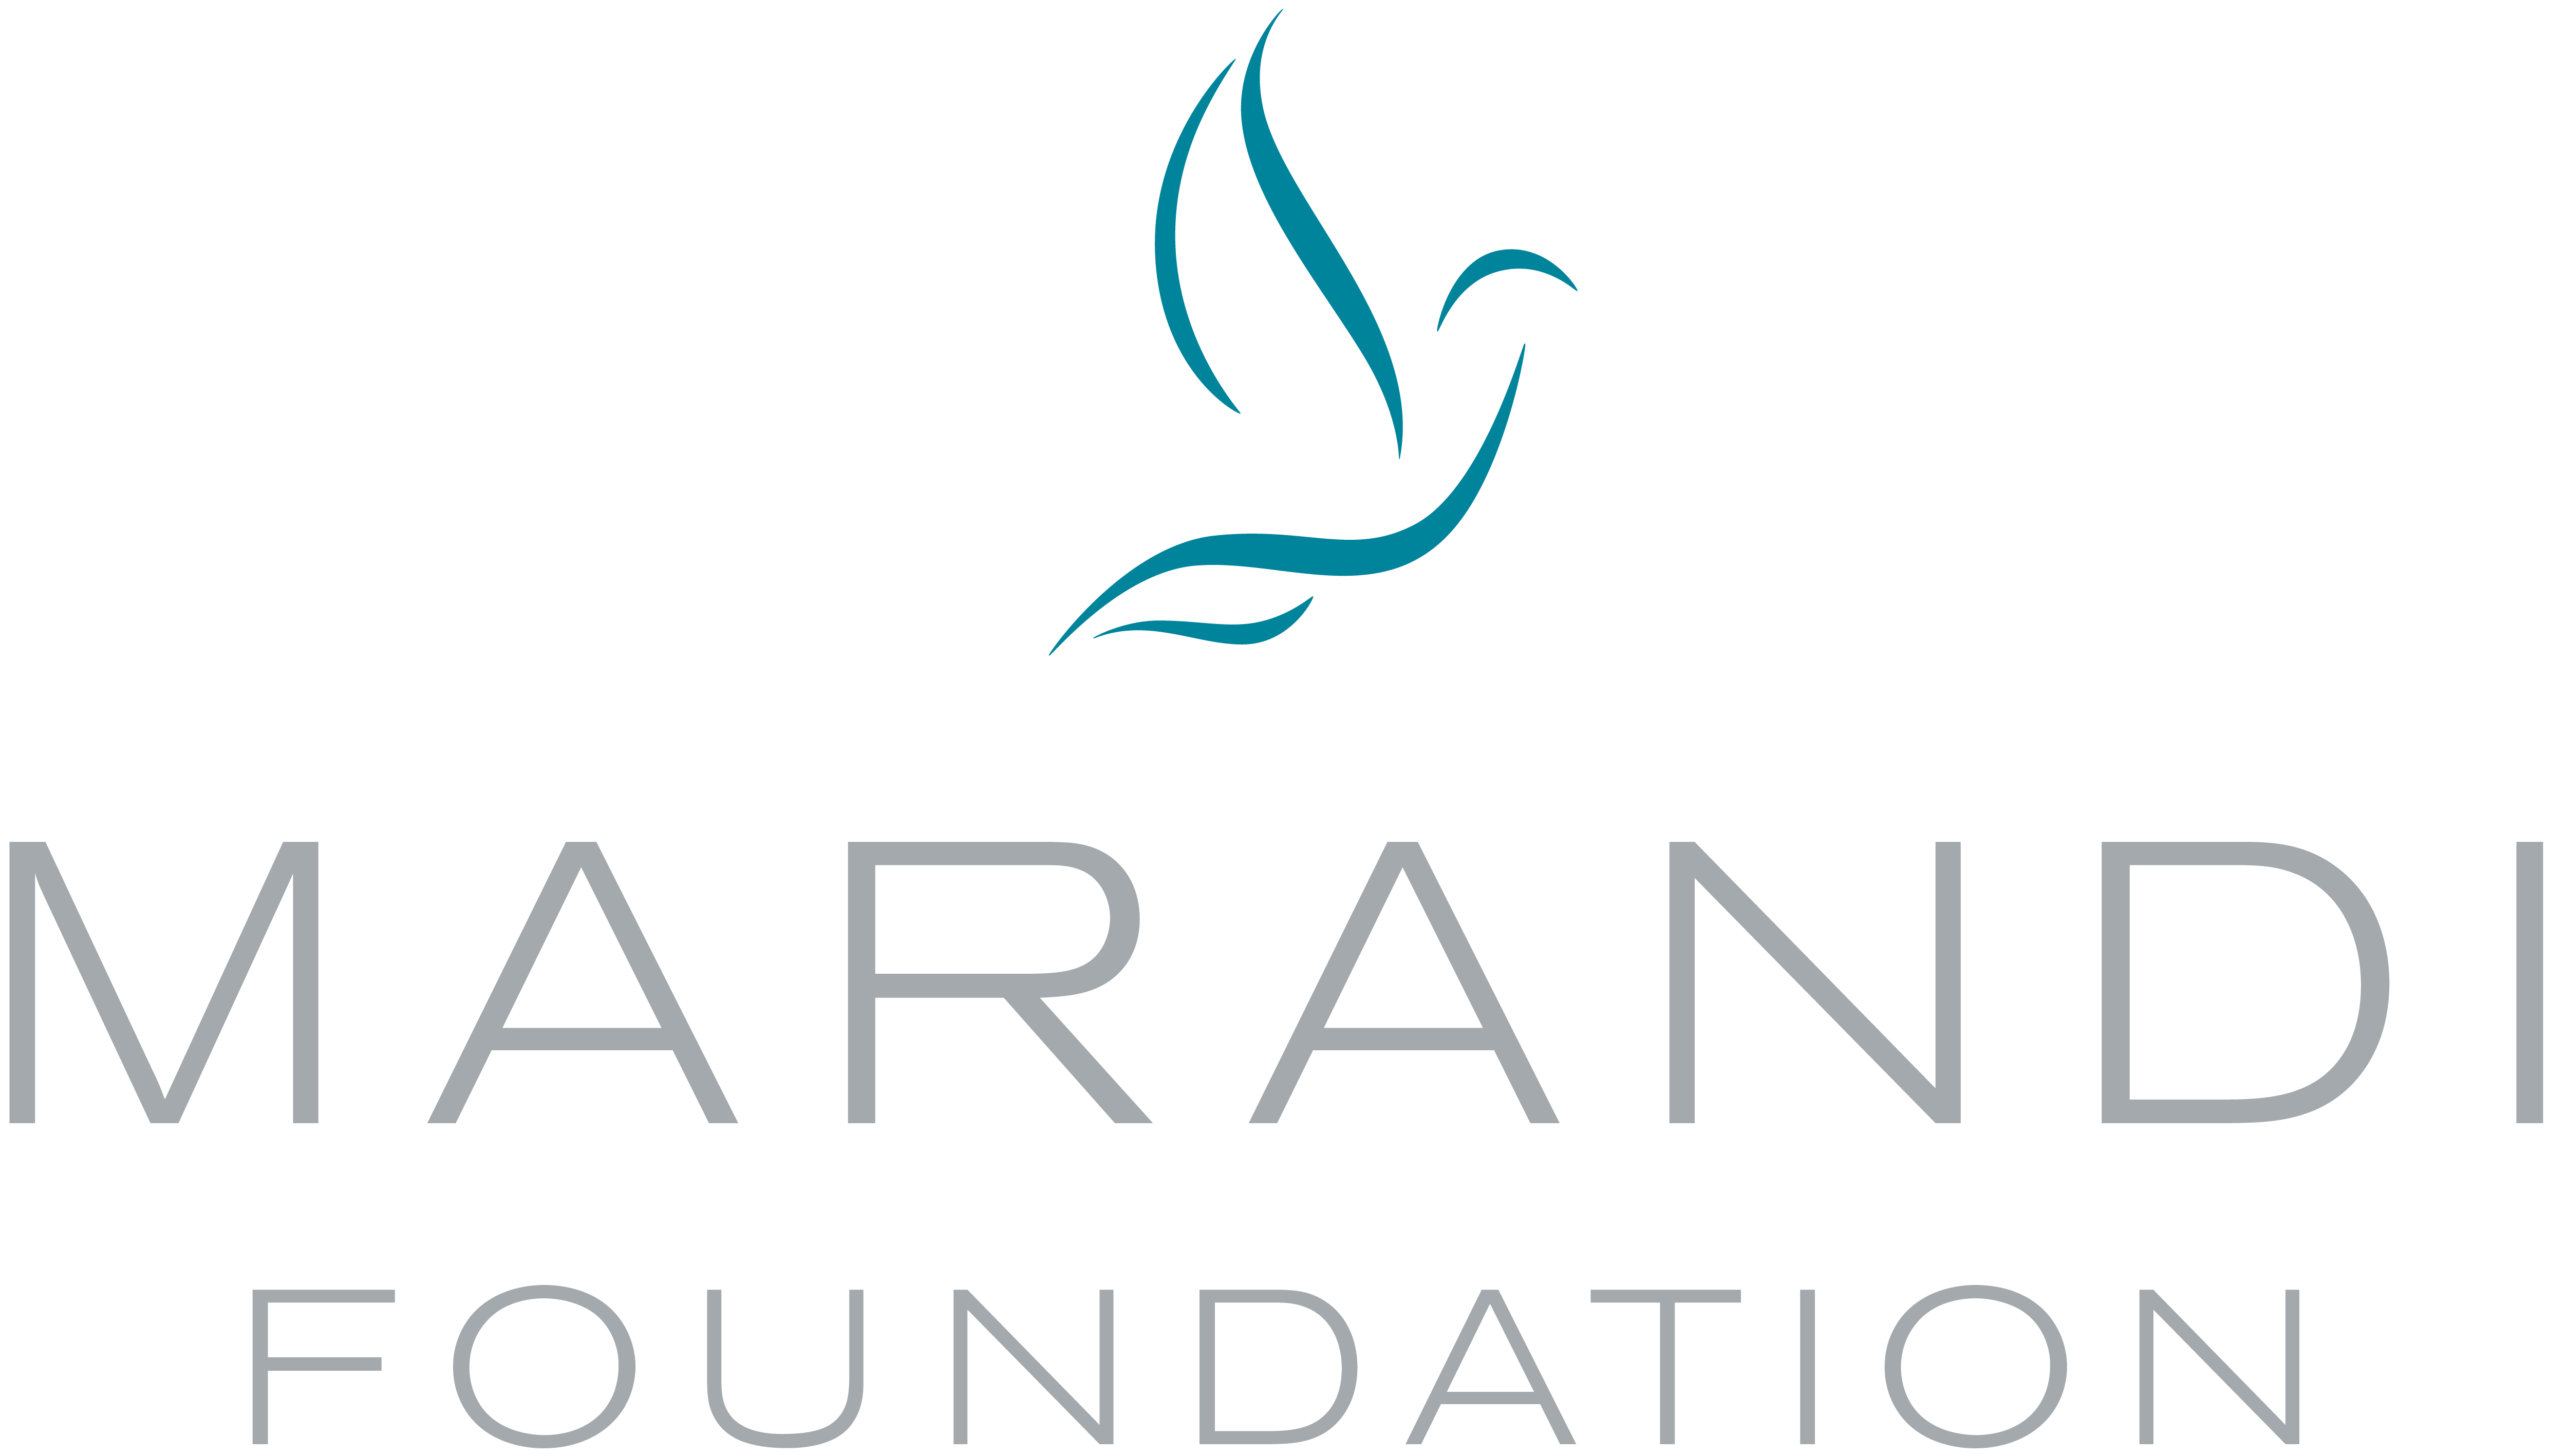 The Marandi Foundation